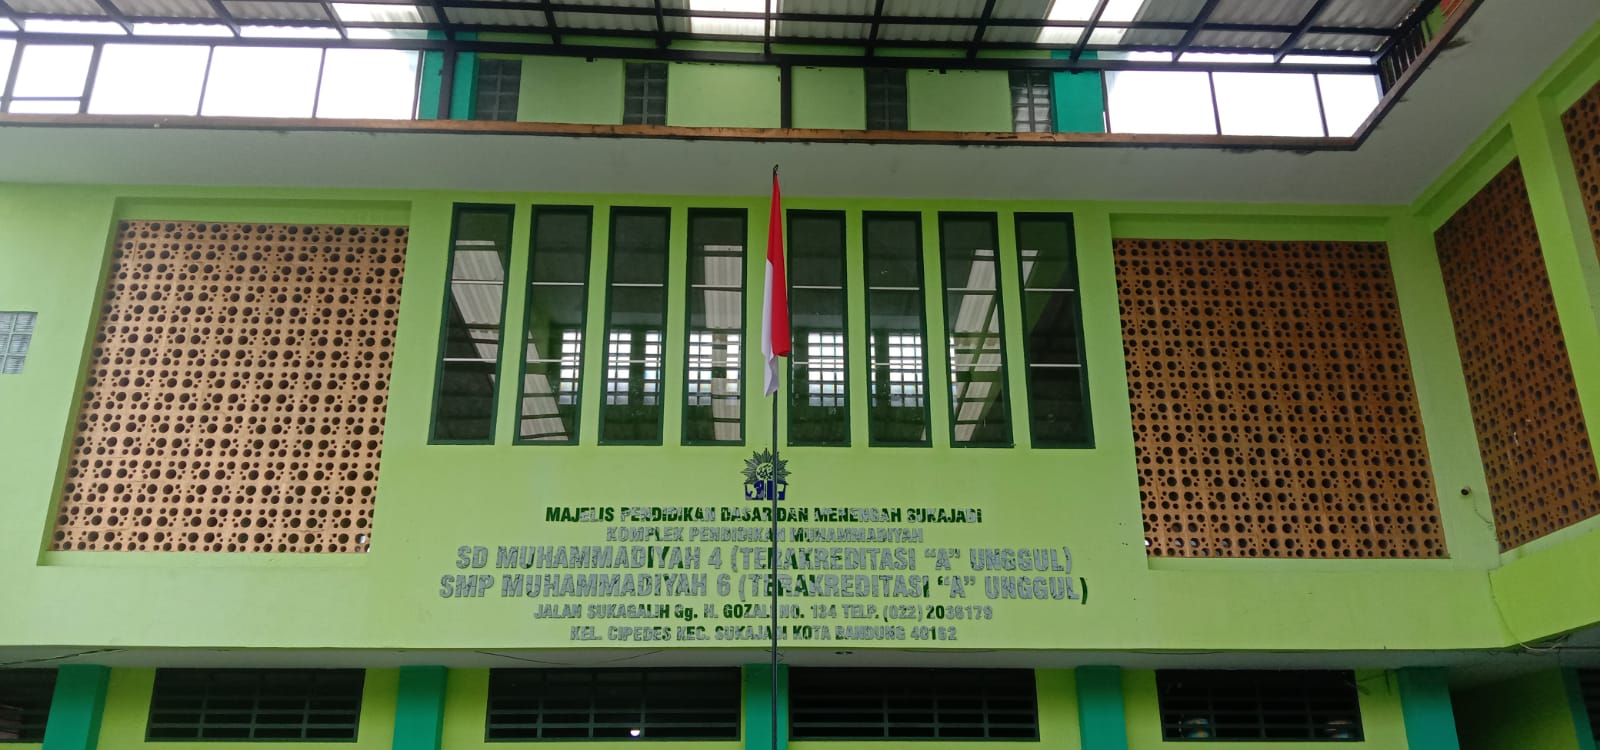 Foto Depan Gedung Sekolah